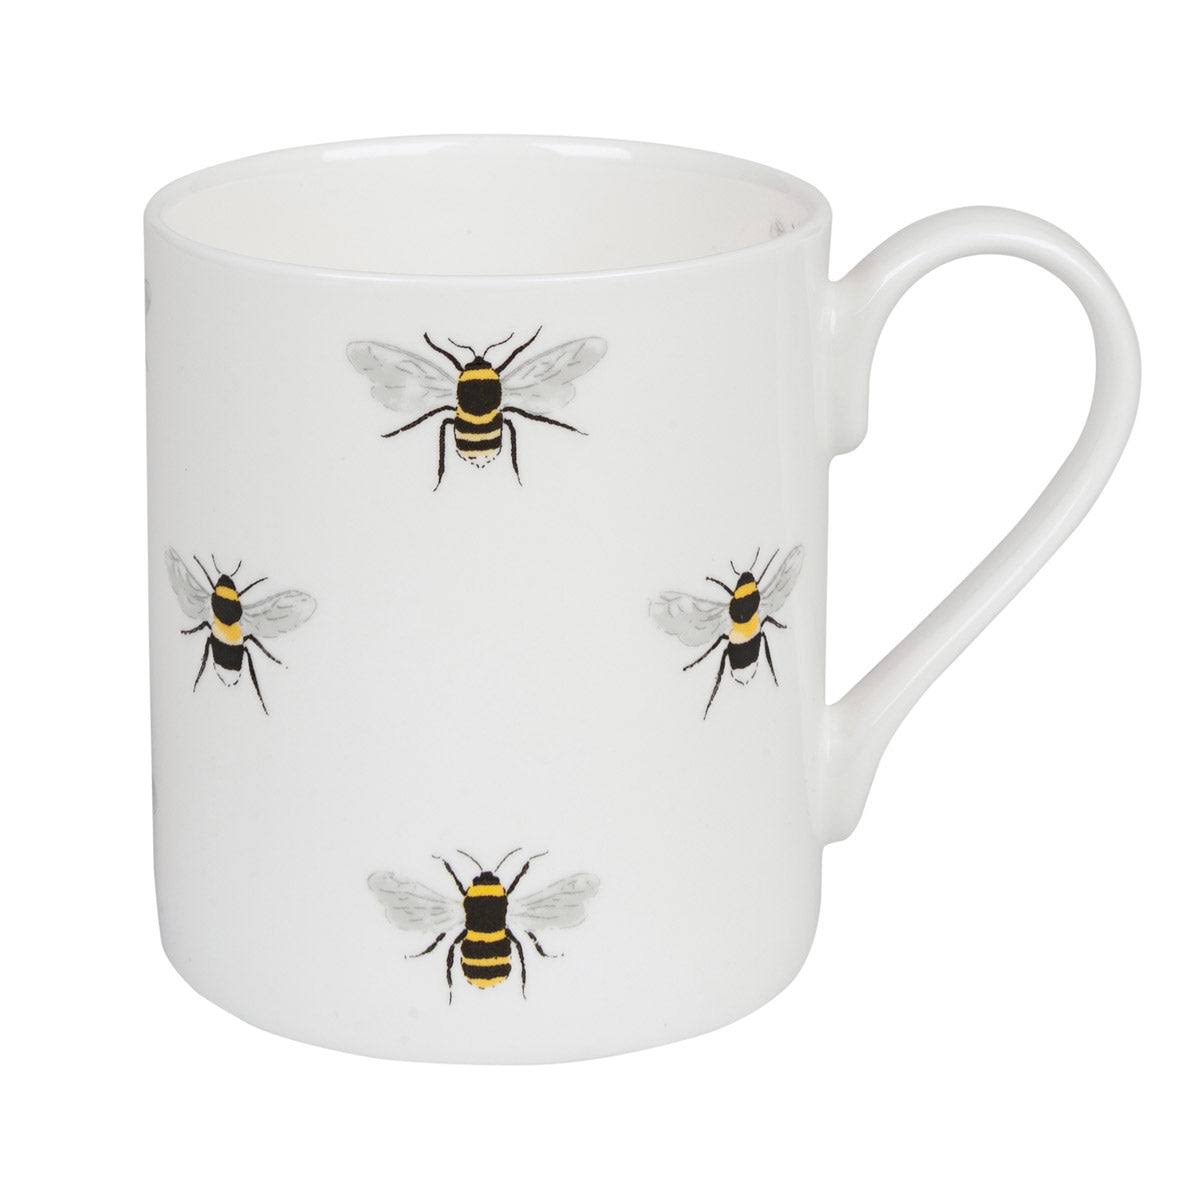 Bees Mug by Sophie Allport